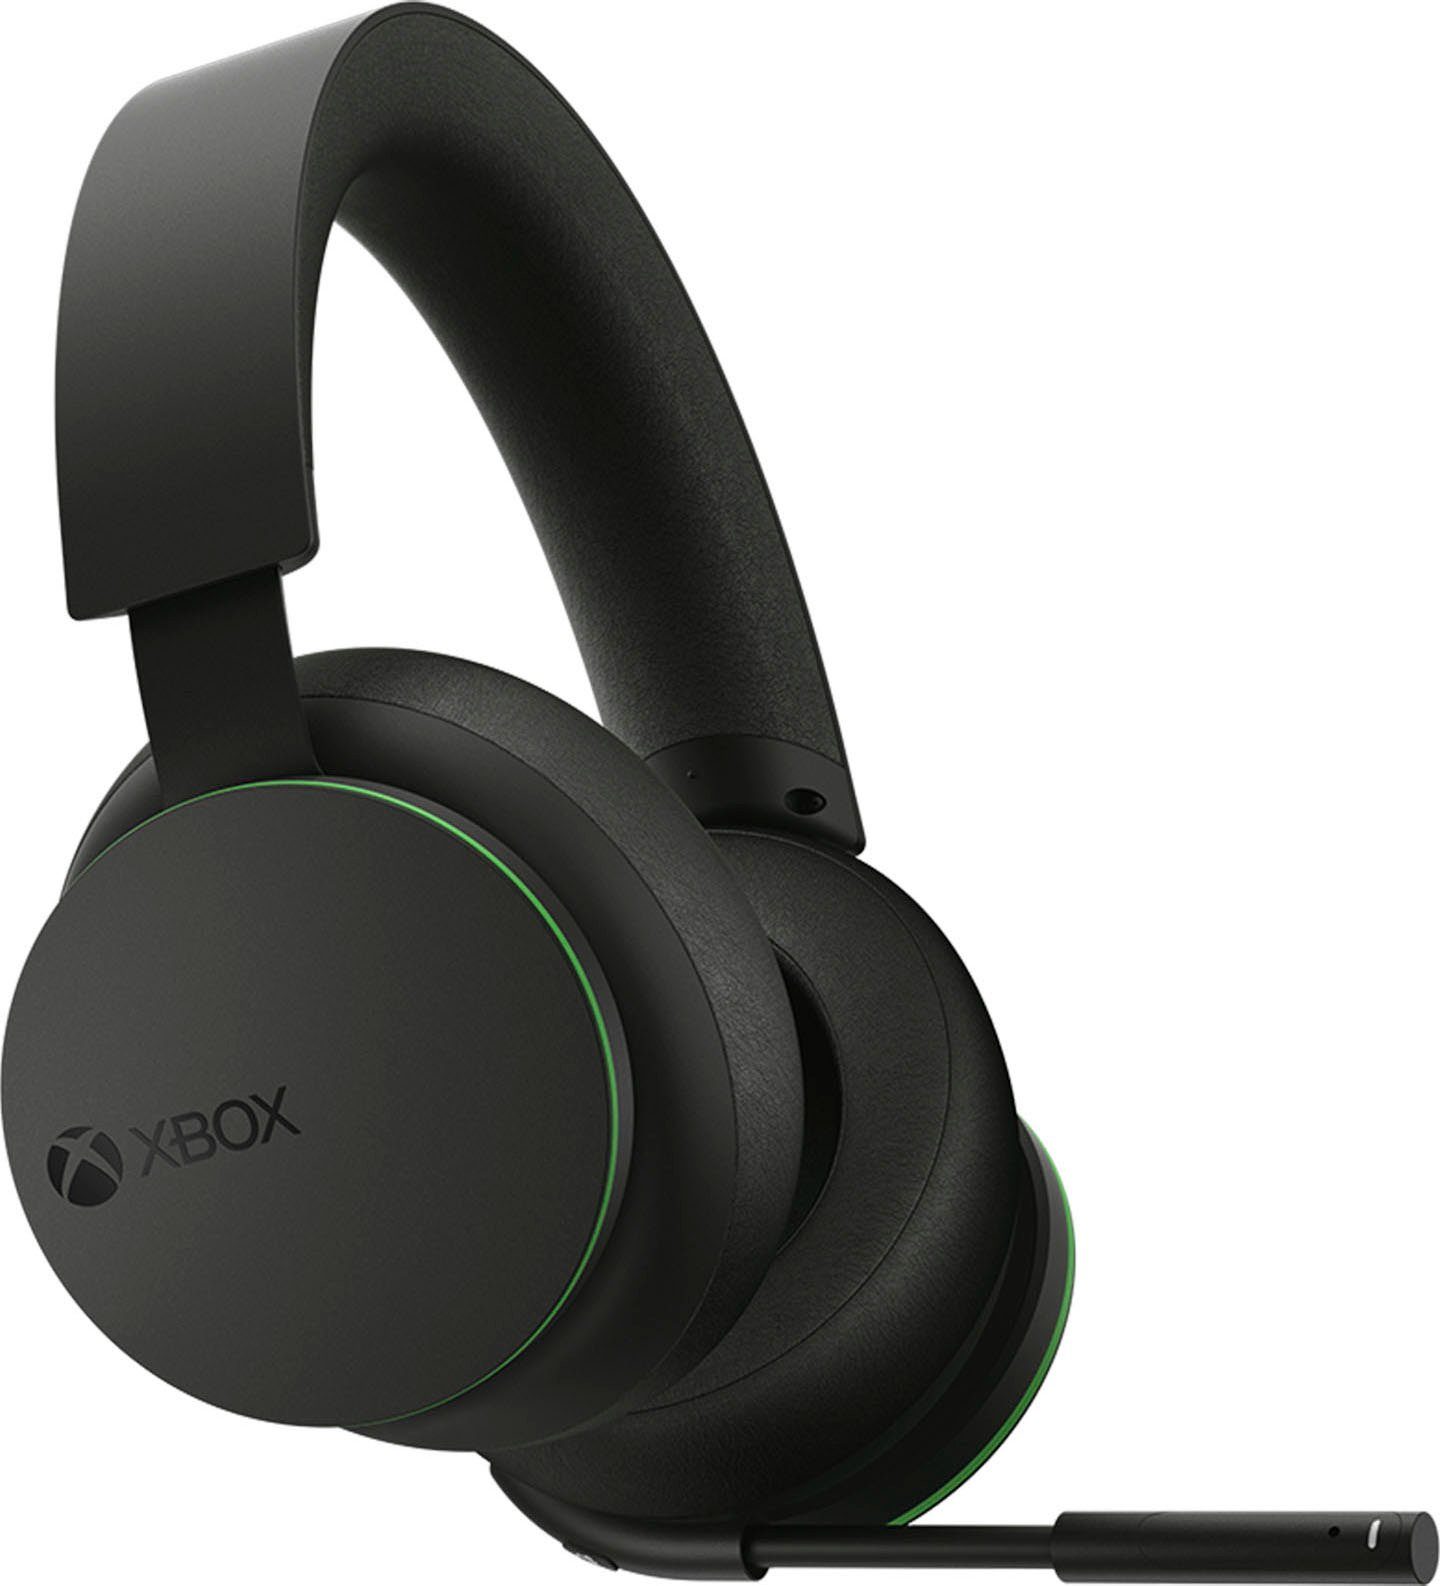 Headset Xbox Wireless (Rauschunterdrückung)